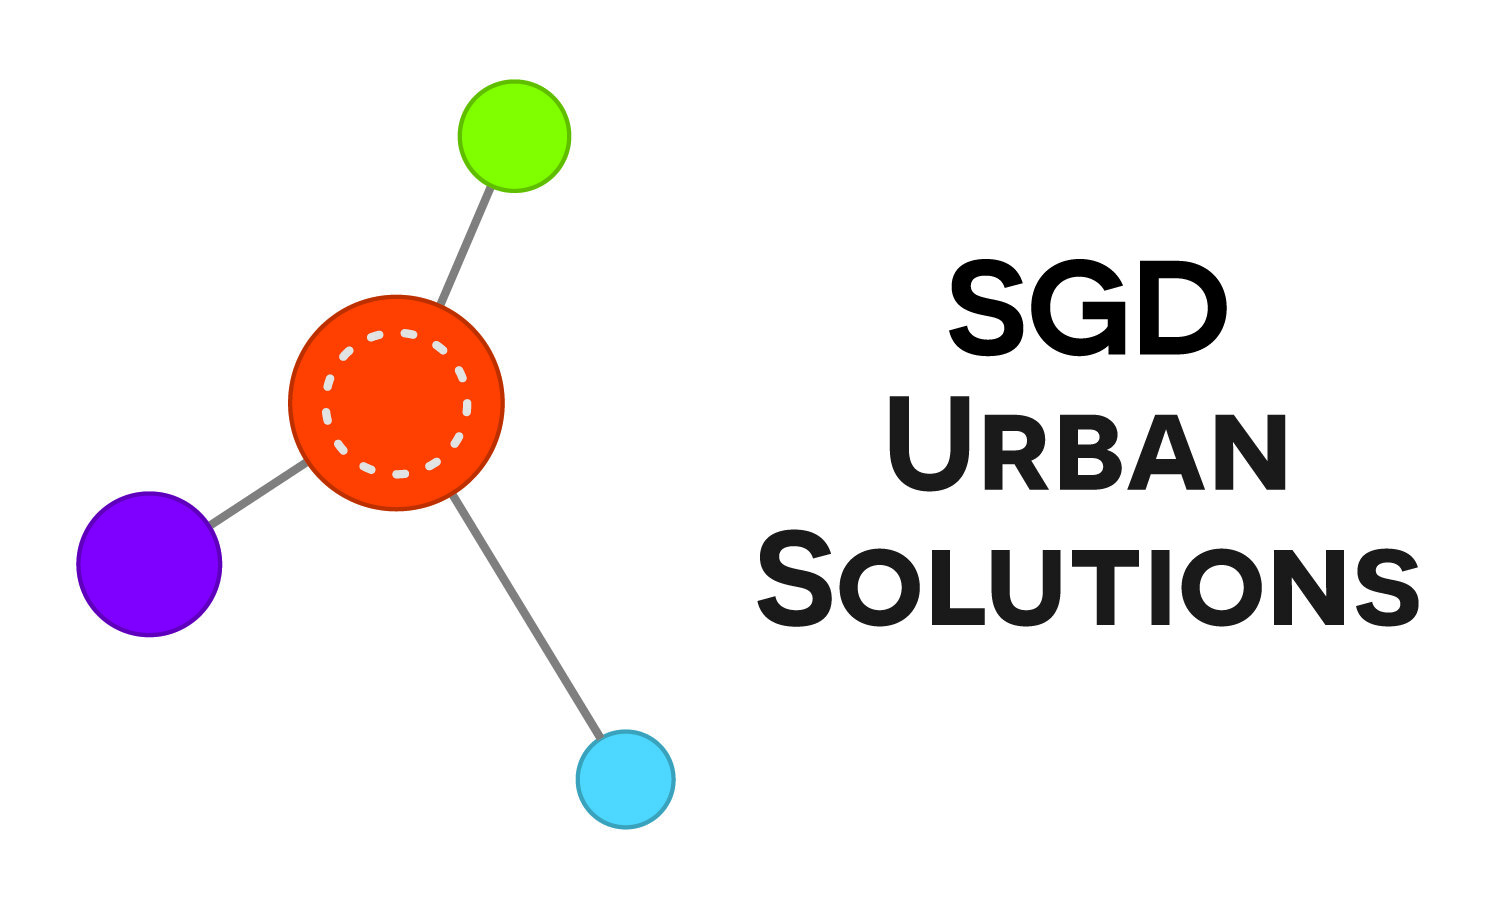 SGD Urban Solutions